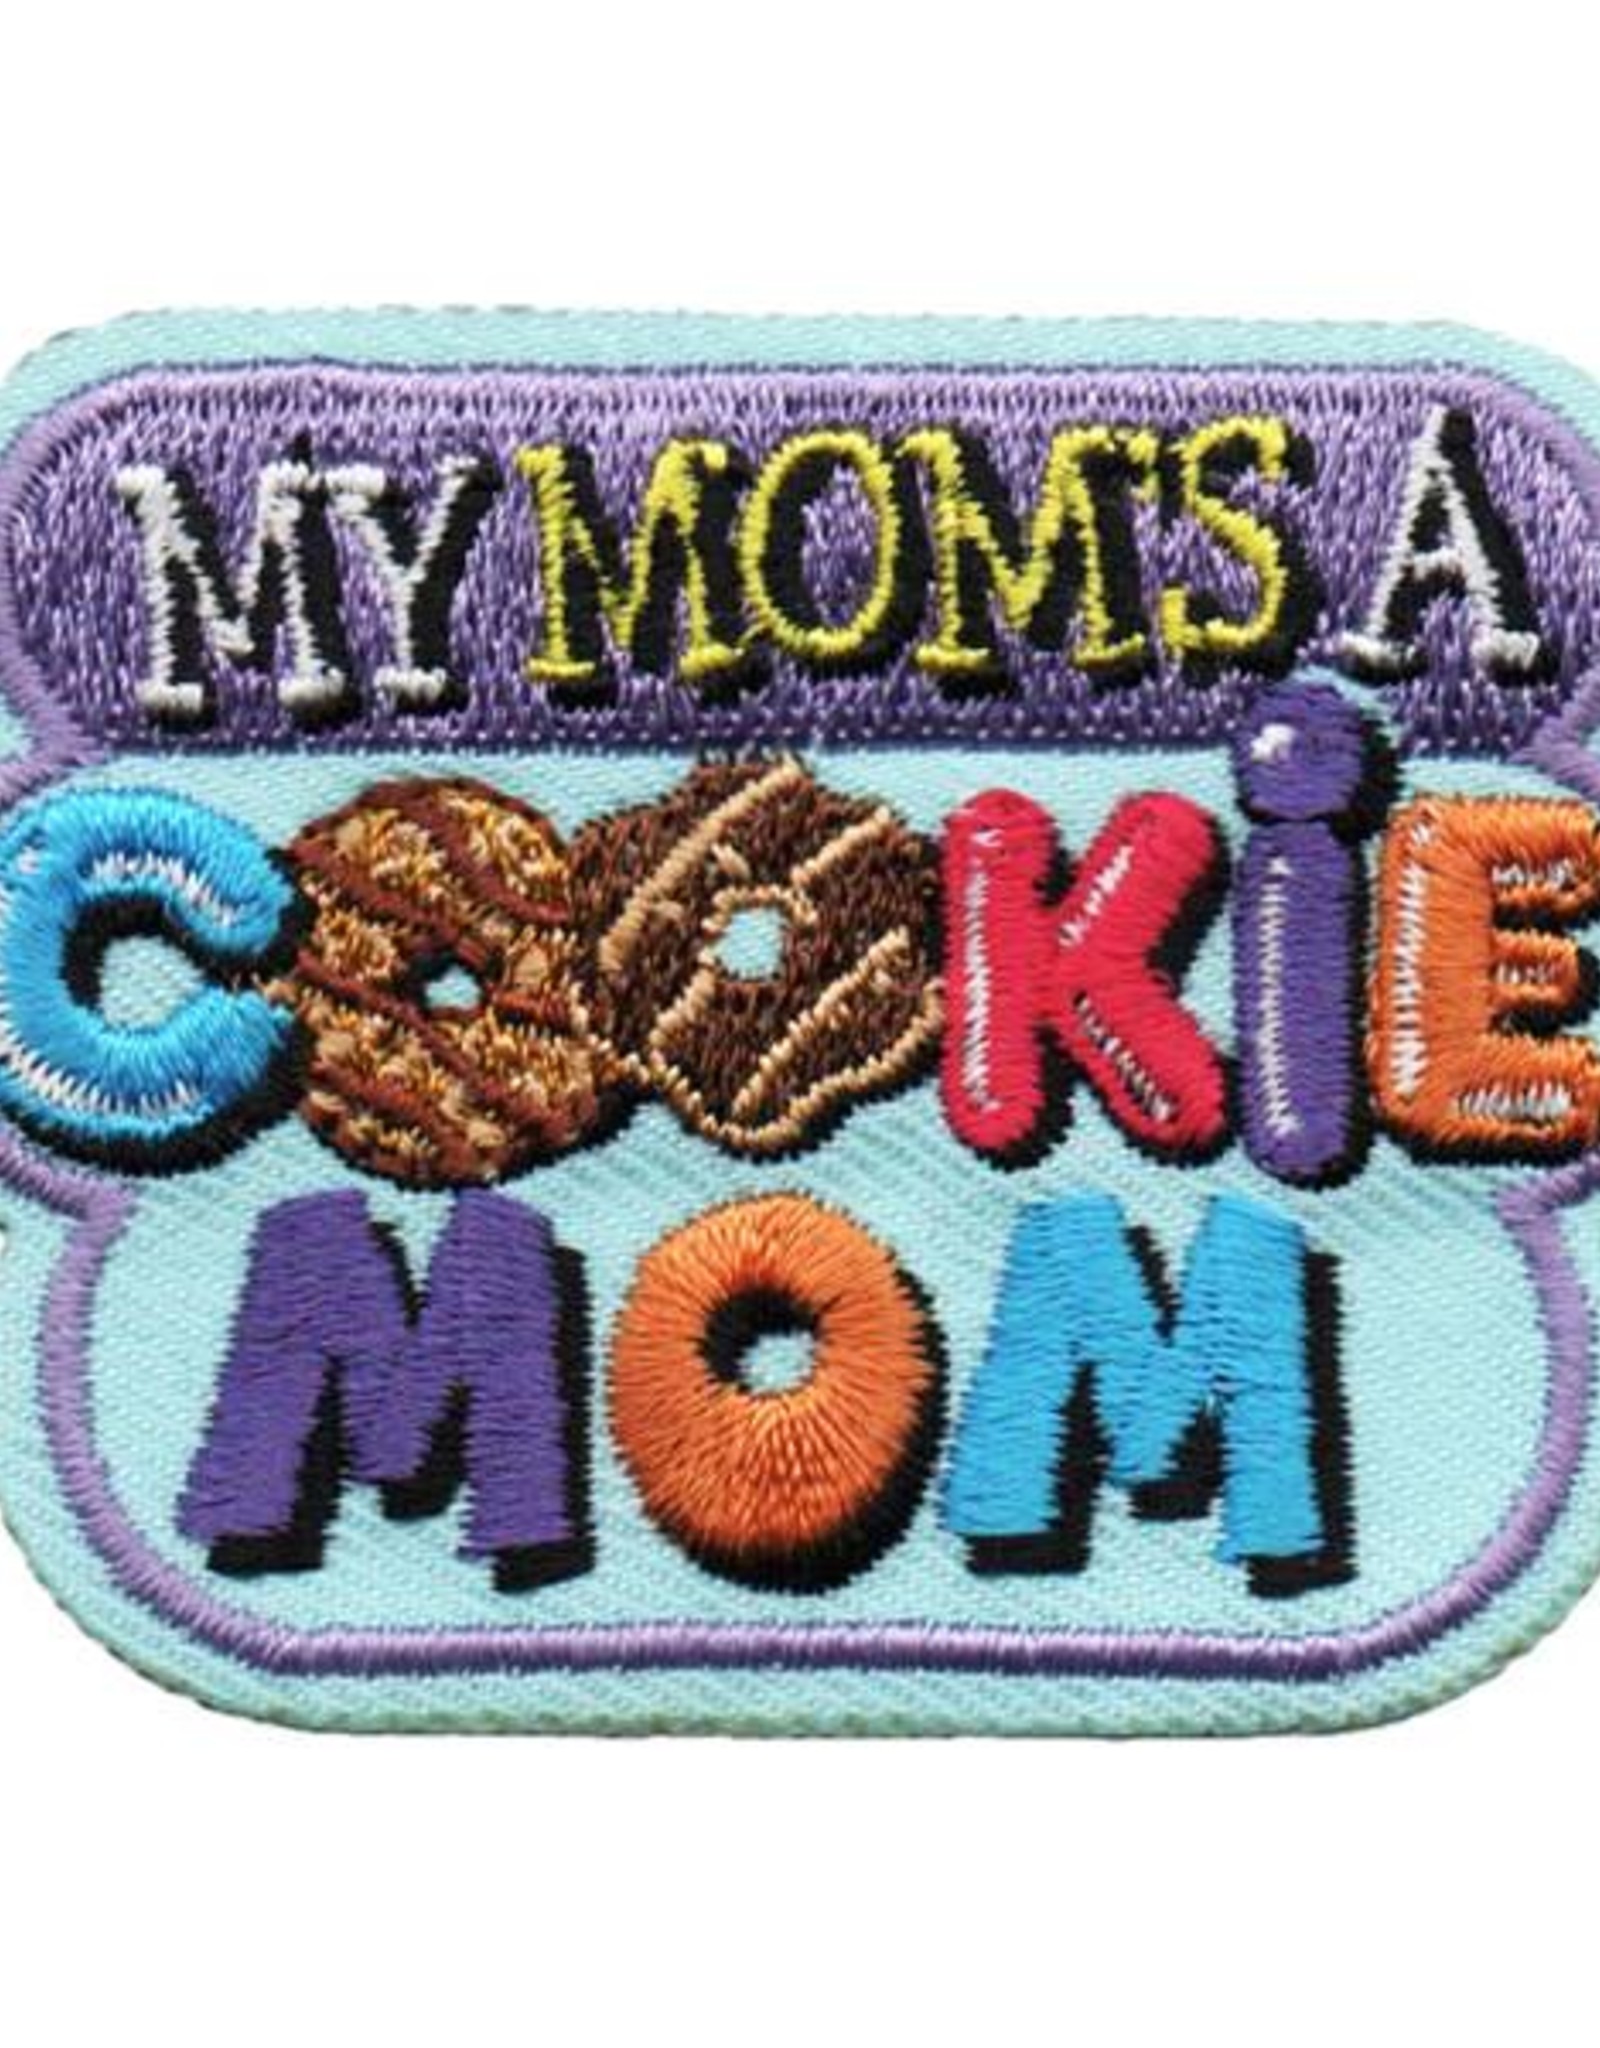 Advantage Emblem & Screen Prnt My Mom's a Cookie Mom Fun Patch